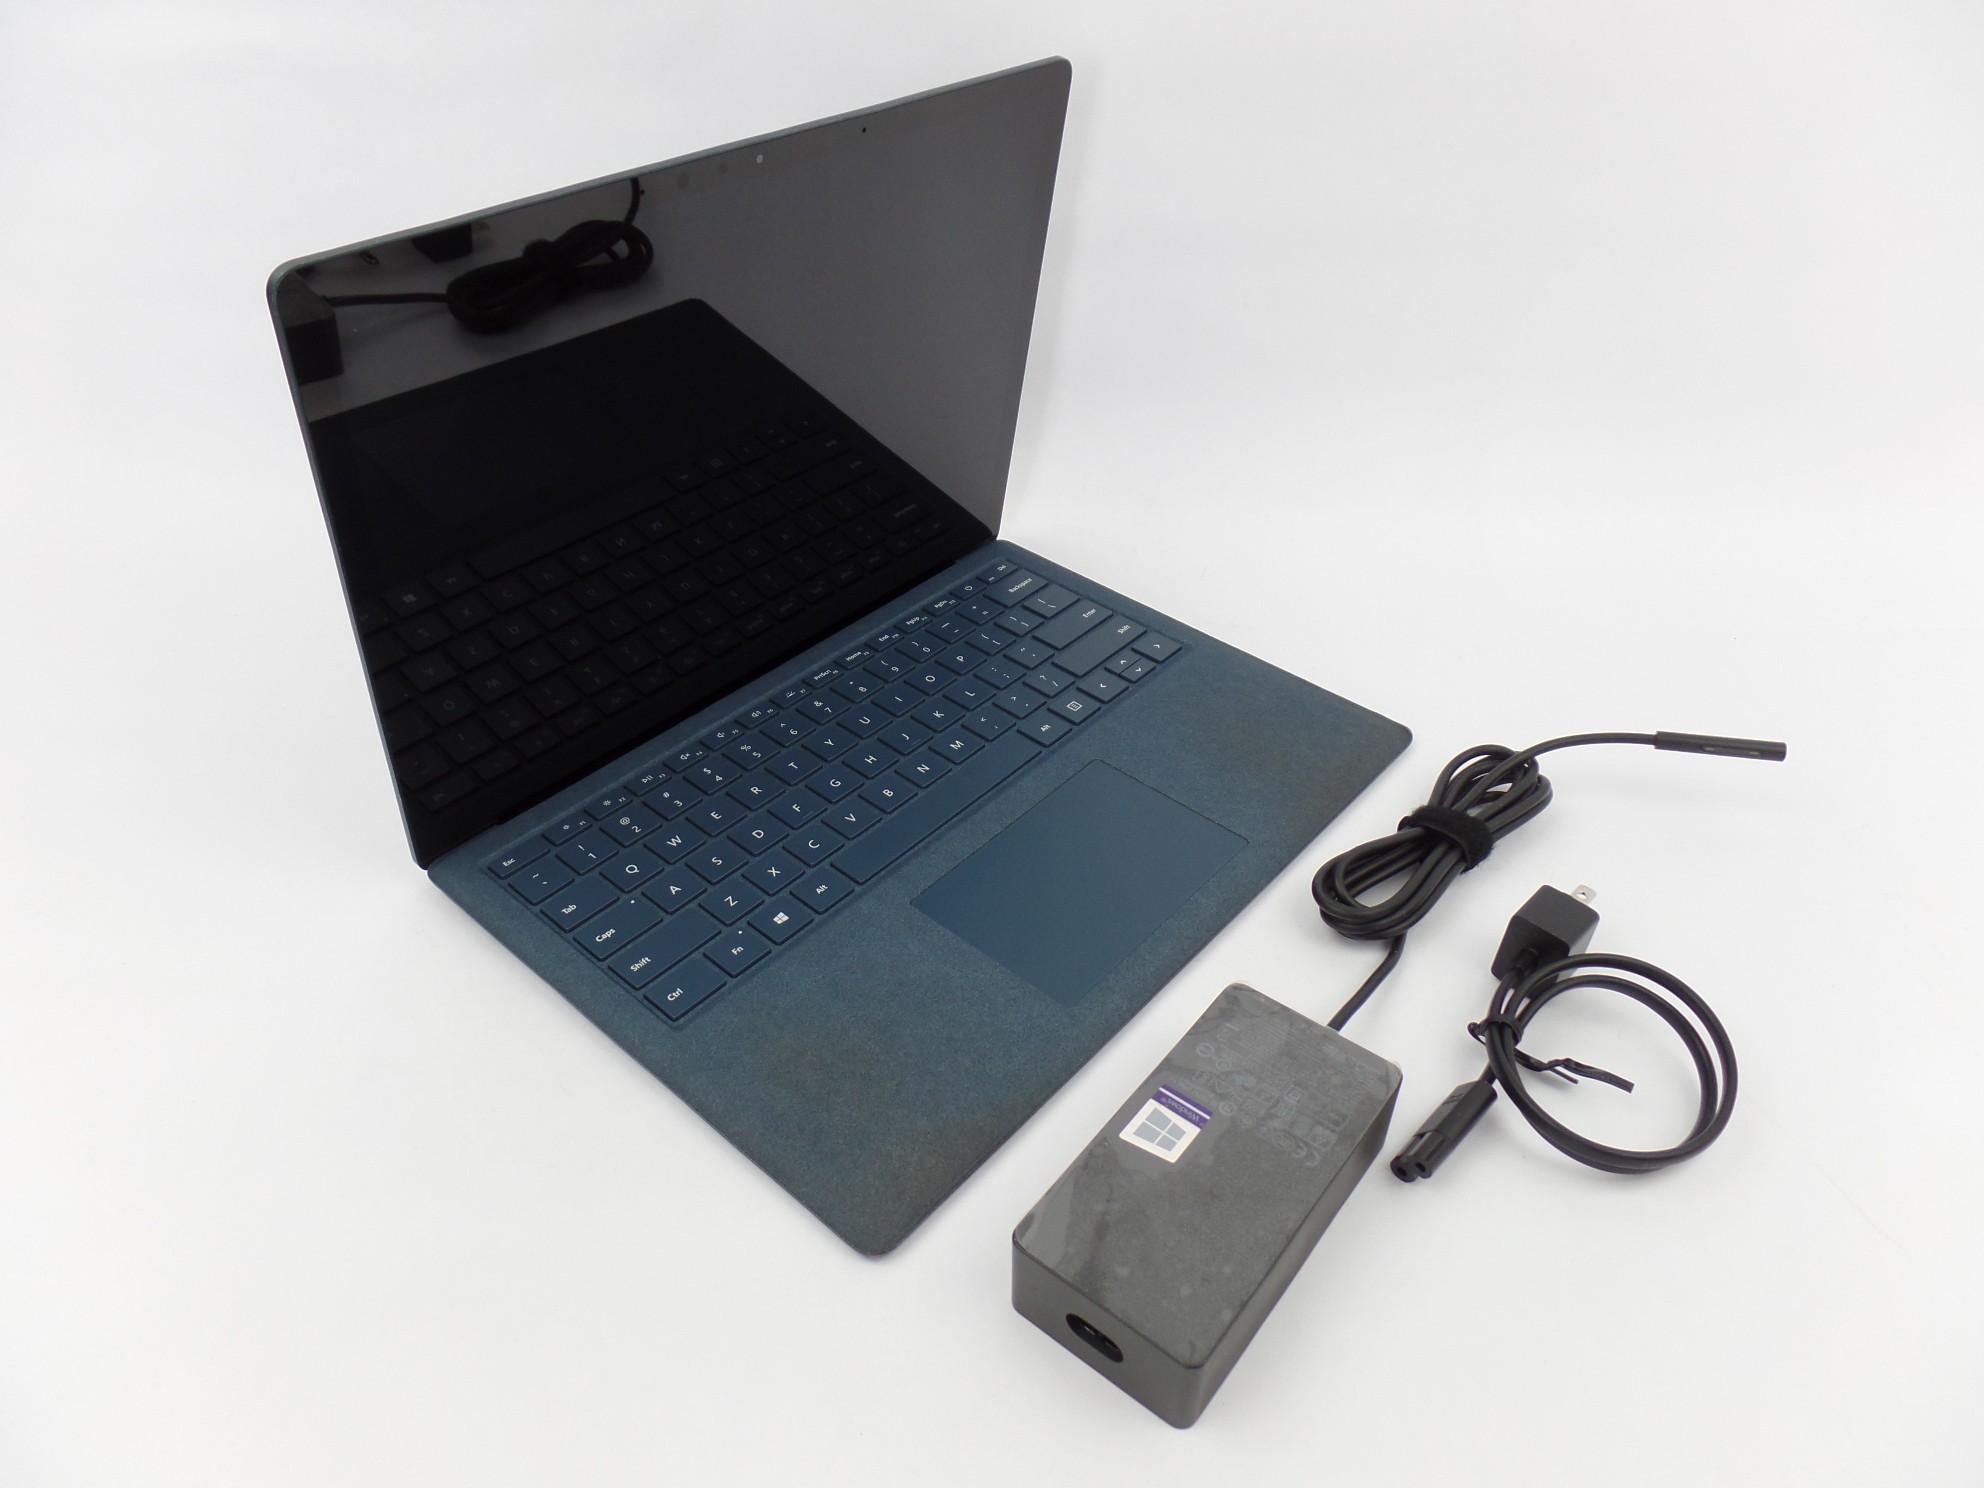 Microsoft Surface Laptop 1769 13.5" Touch i5-7200U 2.5GHz 8GB 256GB SSD Blue U1